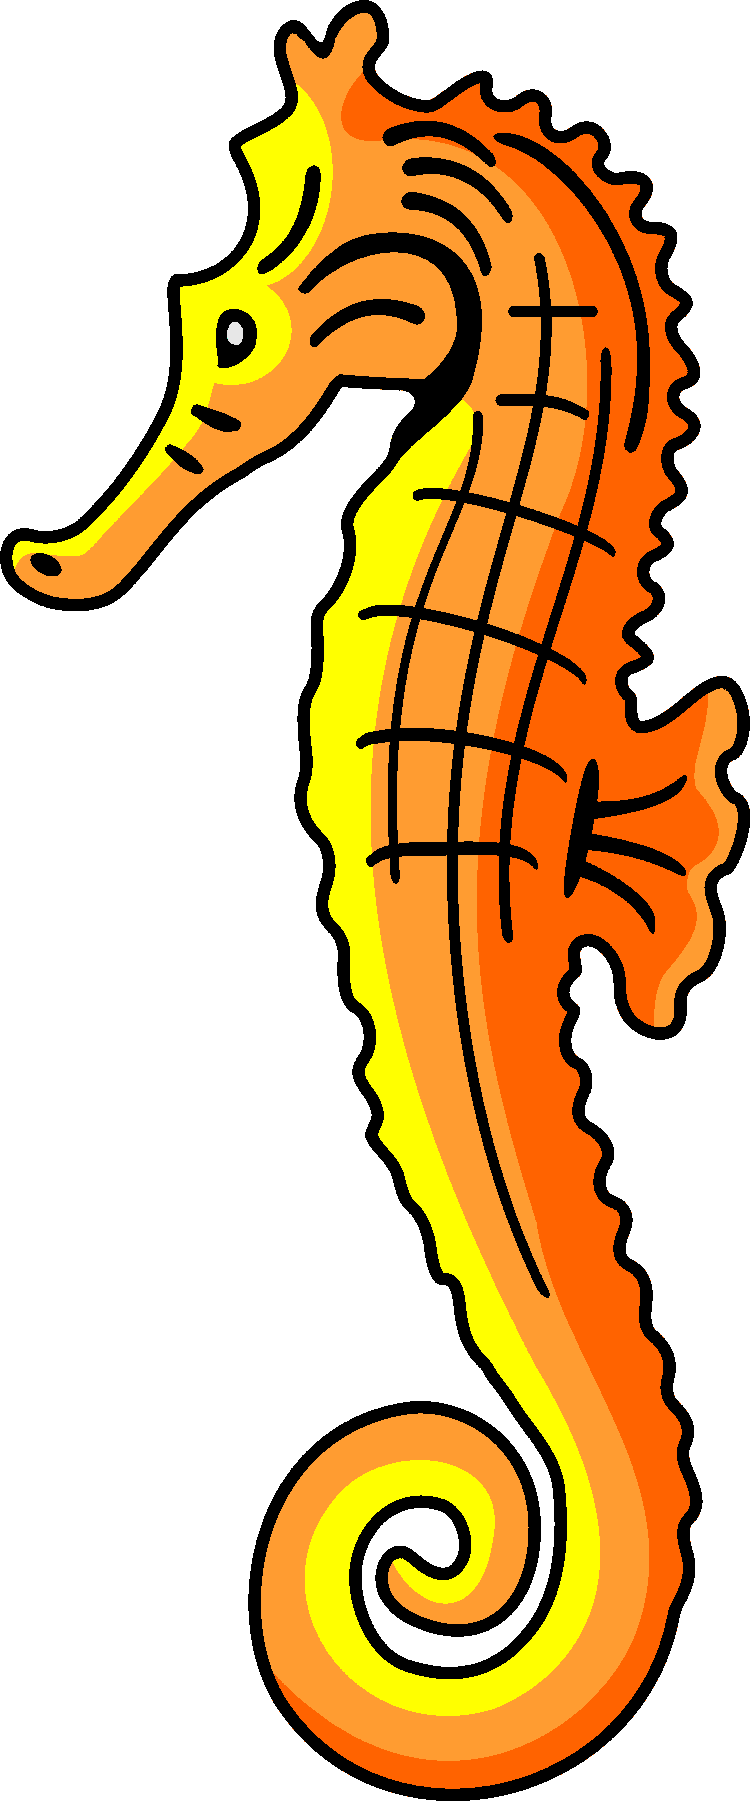 ... Seahorse on seahorses seahorse drawing and seahorse clip art .